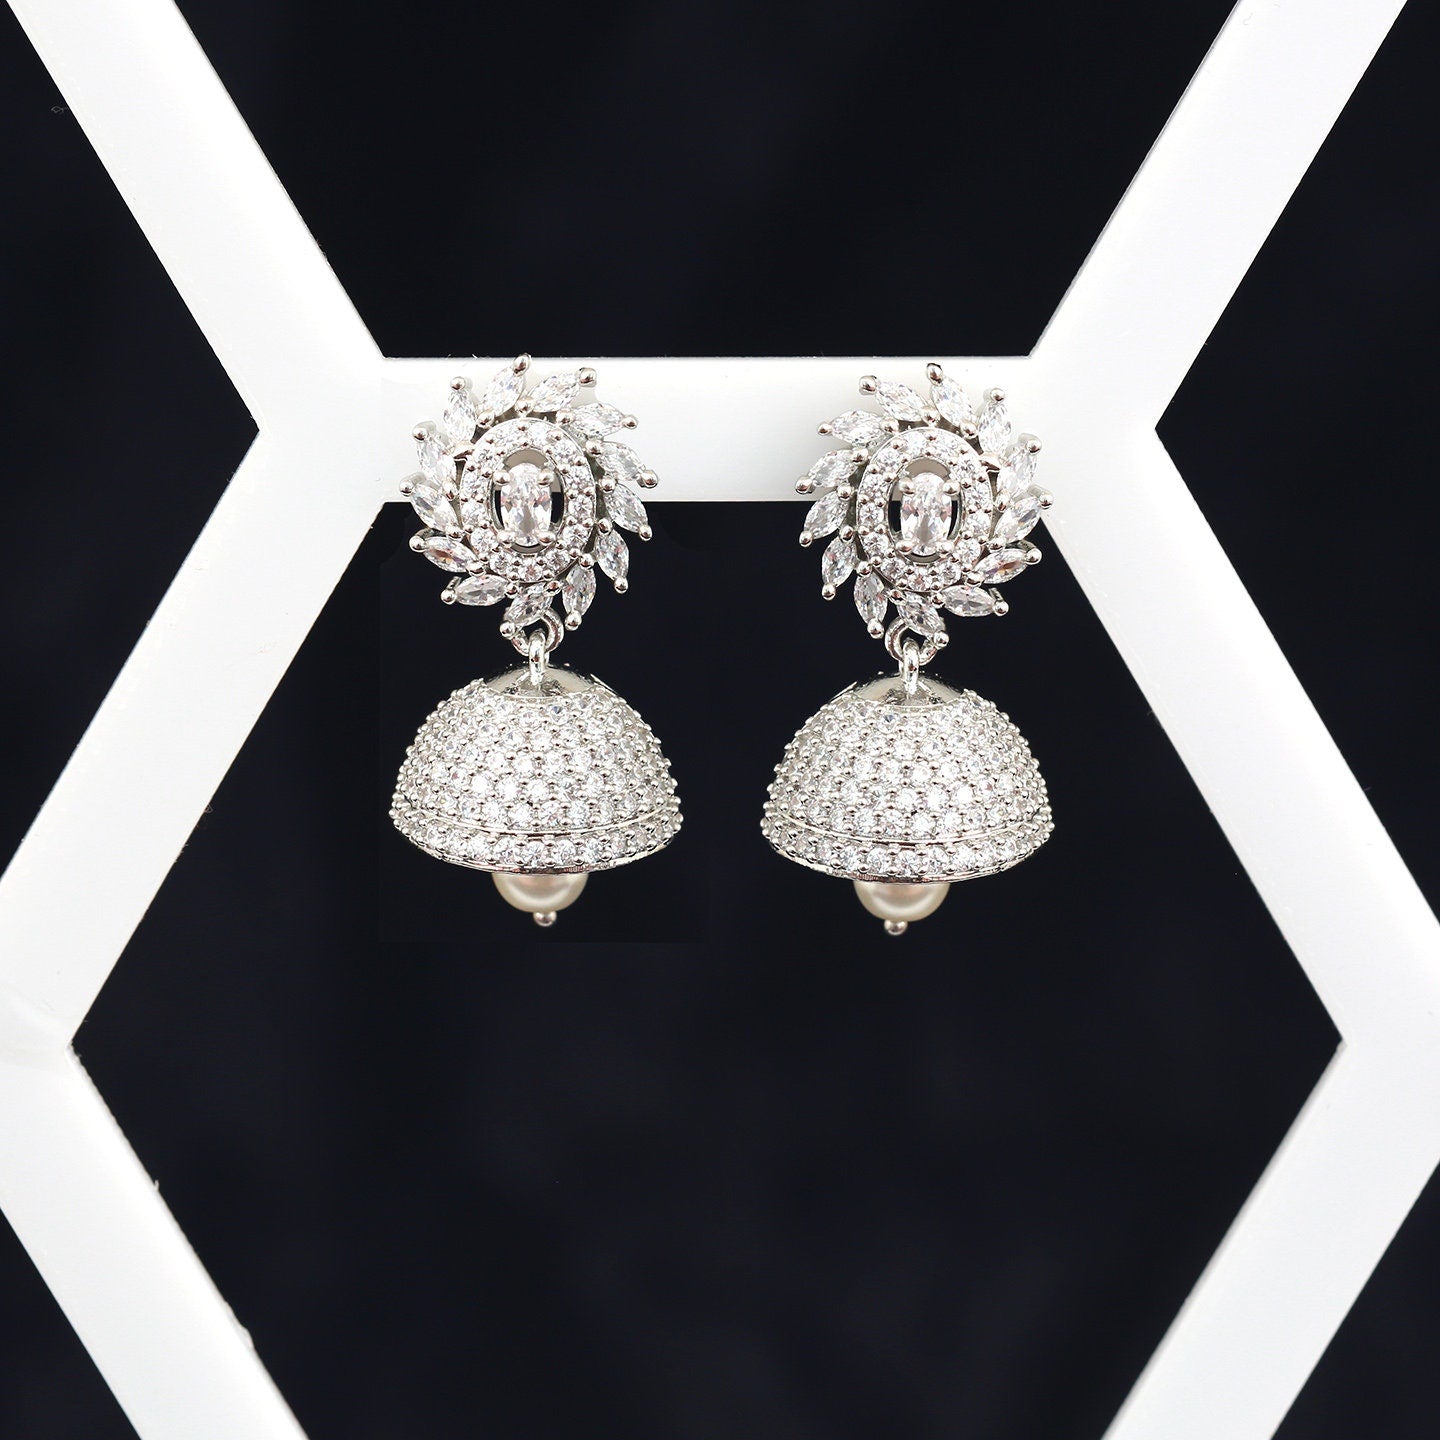 American diamond Jhumka earrings | Small CZ diamond jhumkas | Indian Earrings | Bollywood Style Silver Earrings with CZ diamond stones